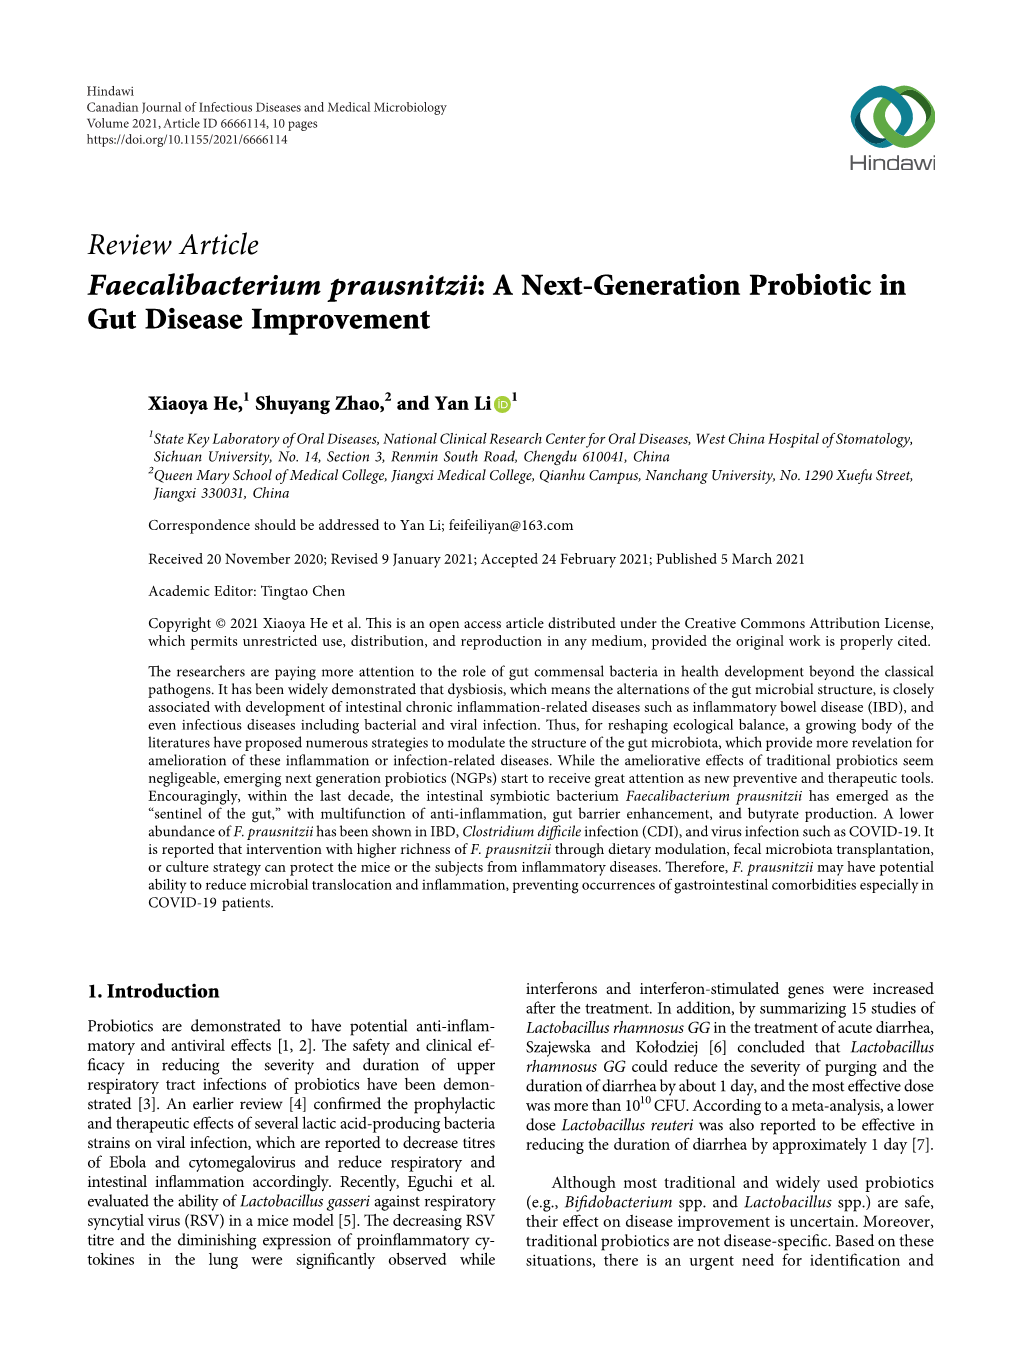 Faecalibacterium Prausnitzii: a Next-Generation Probiotic in Gut Disease Improvement